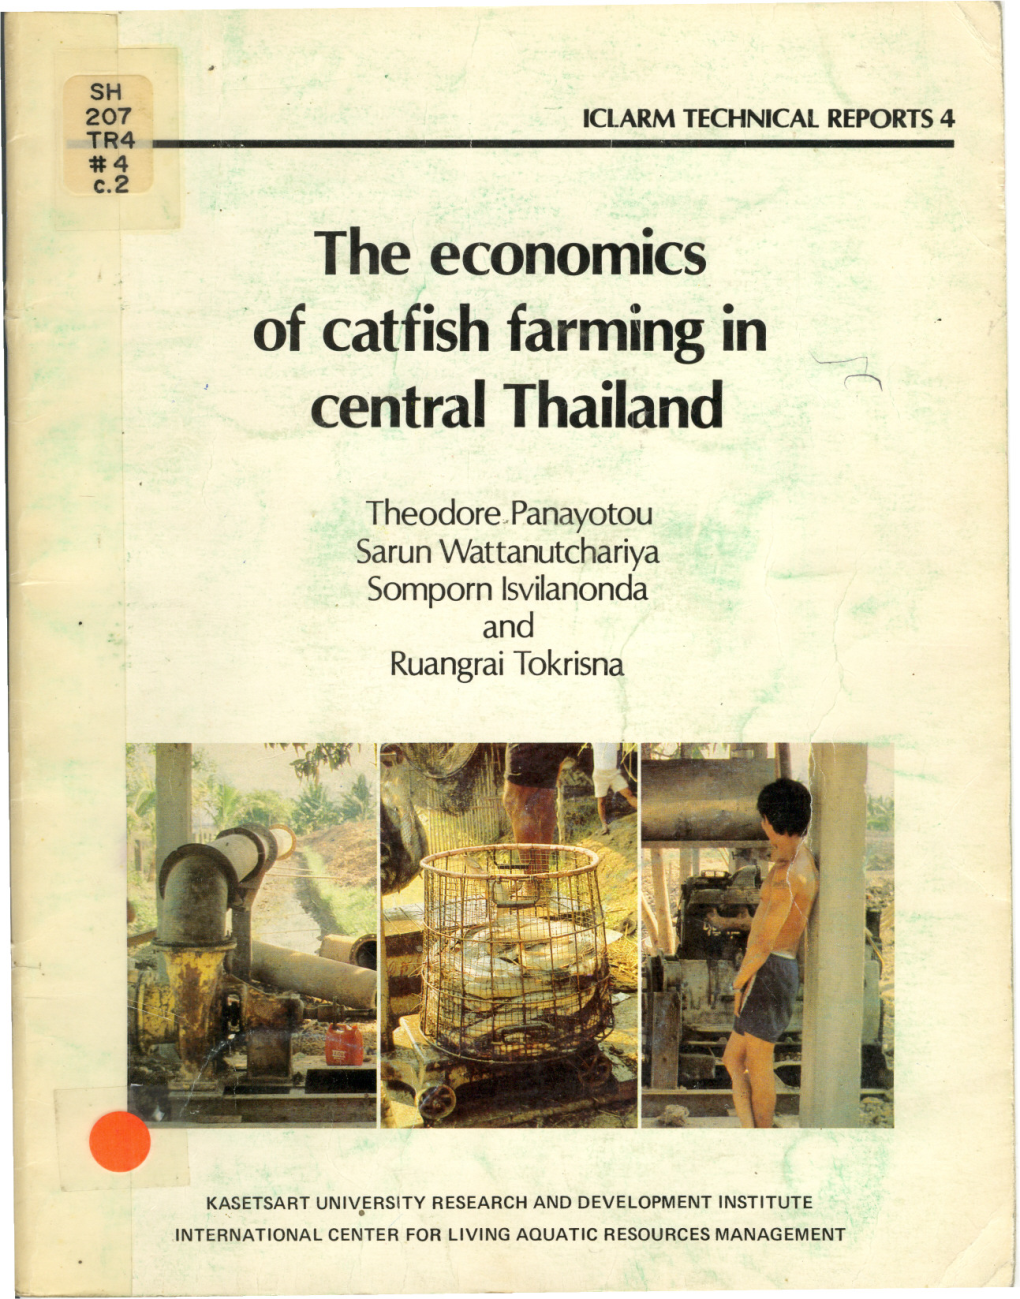 The Economics of Catfish Farming in Central Thailand ~Heemicsof Catfish Farming in Central Thailand